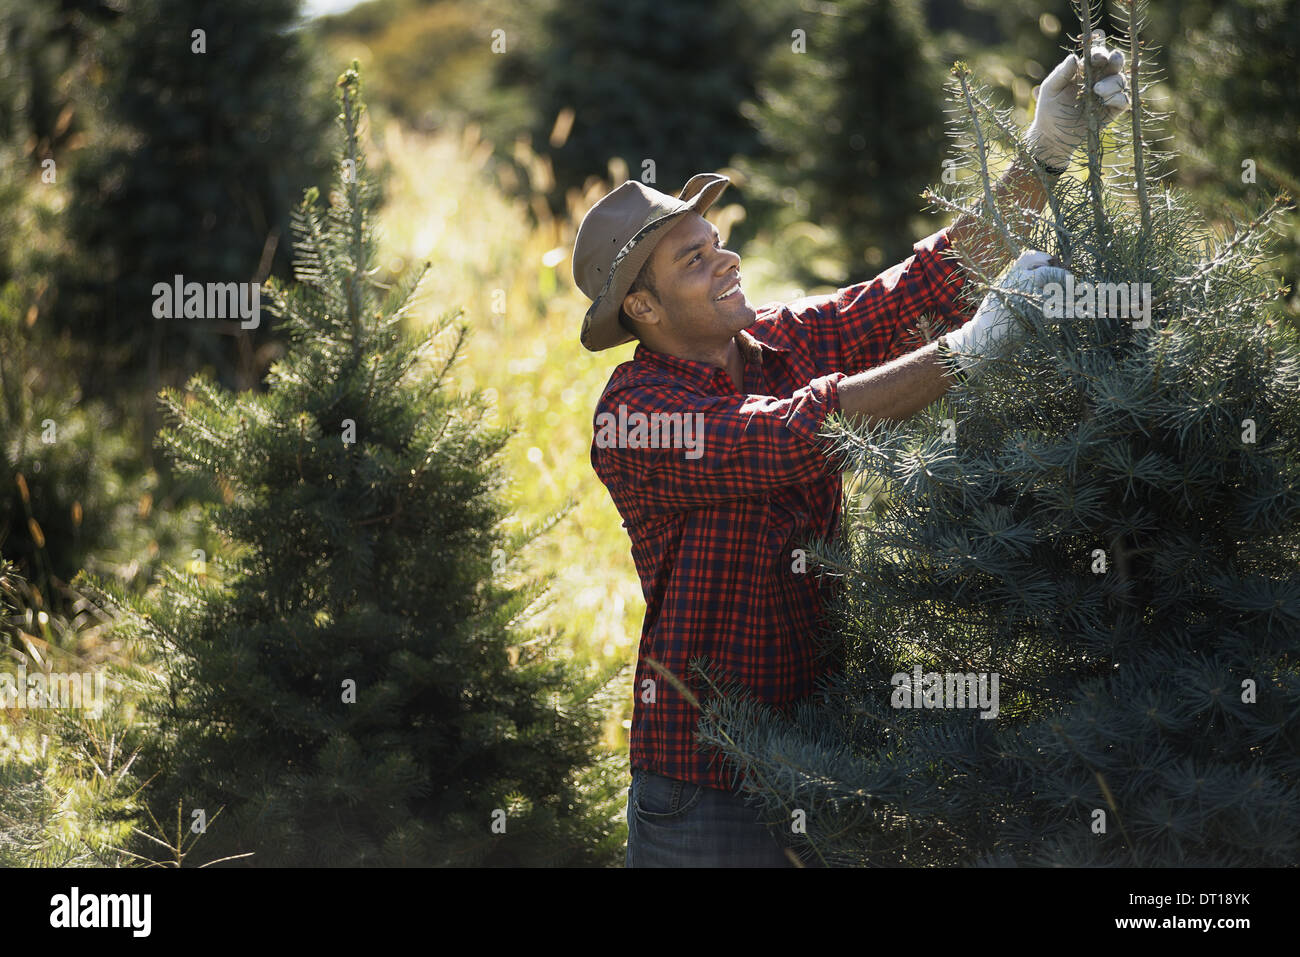 Woodstock New York USA man hat in plantation of organic Christmas trees Stock Photo